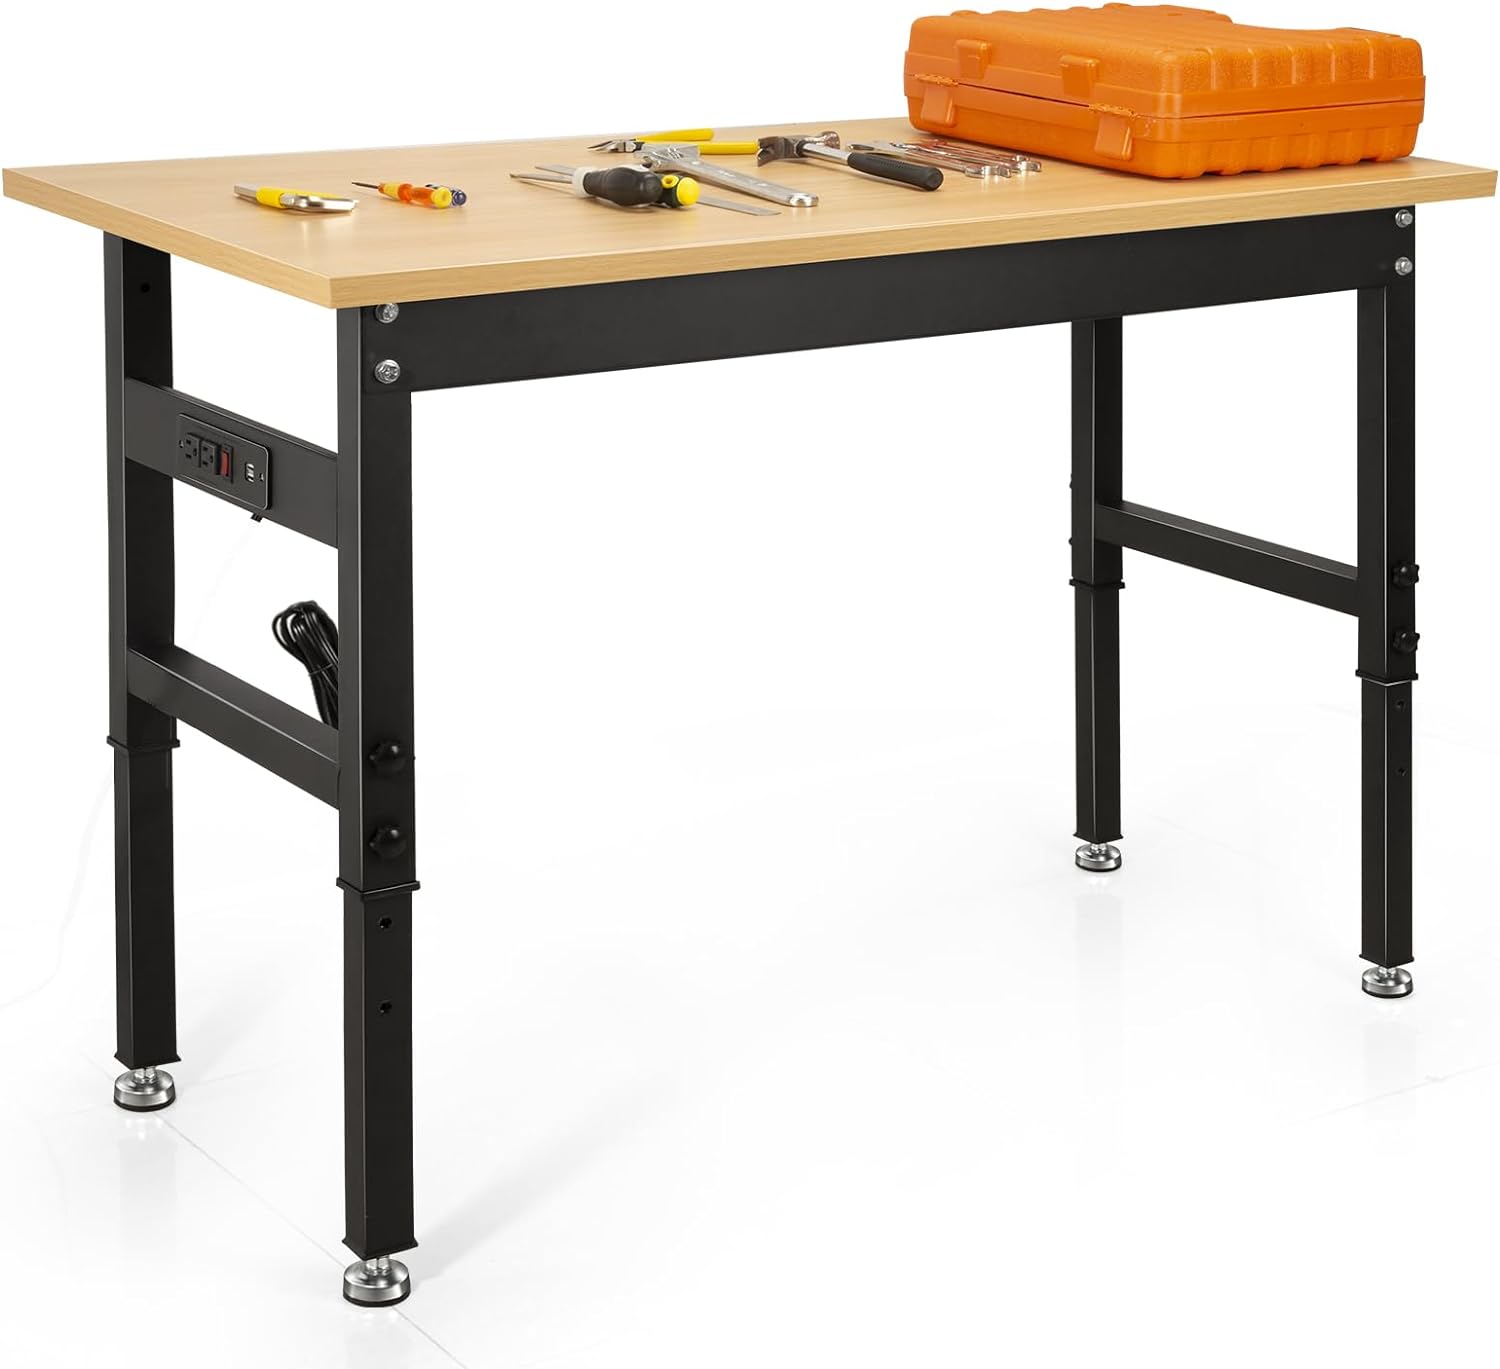 AHGOKL Work Bench, 48" Workbench, Adjustable Work Table，2000LBS Load Capacity